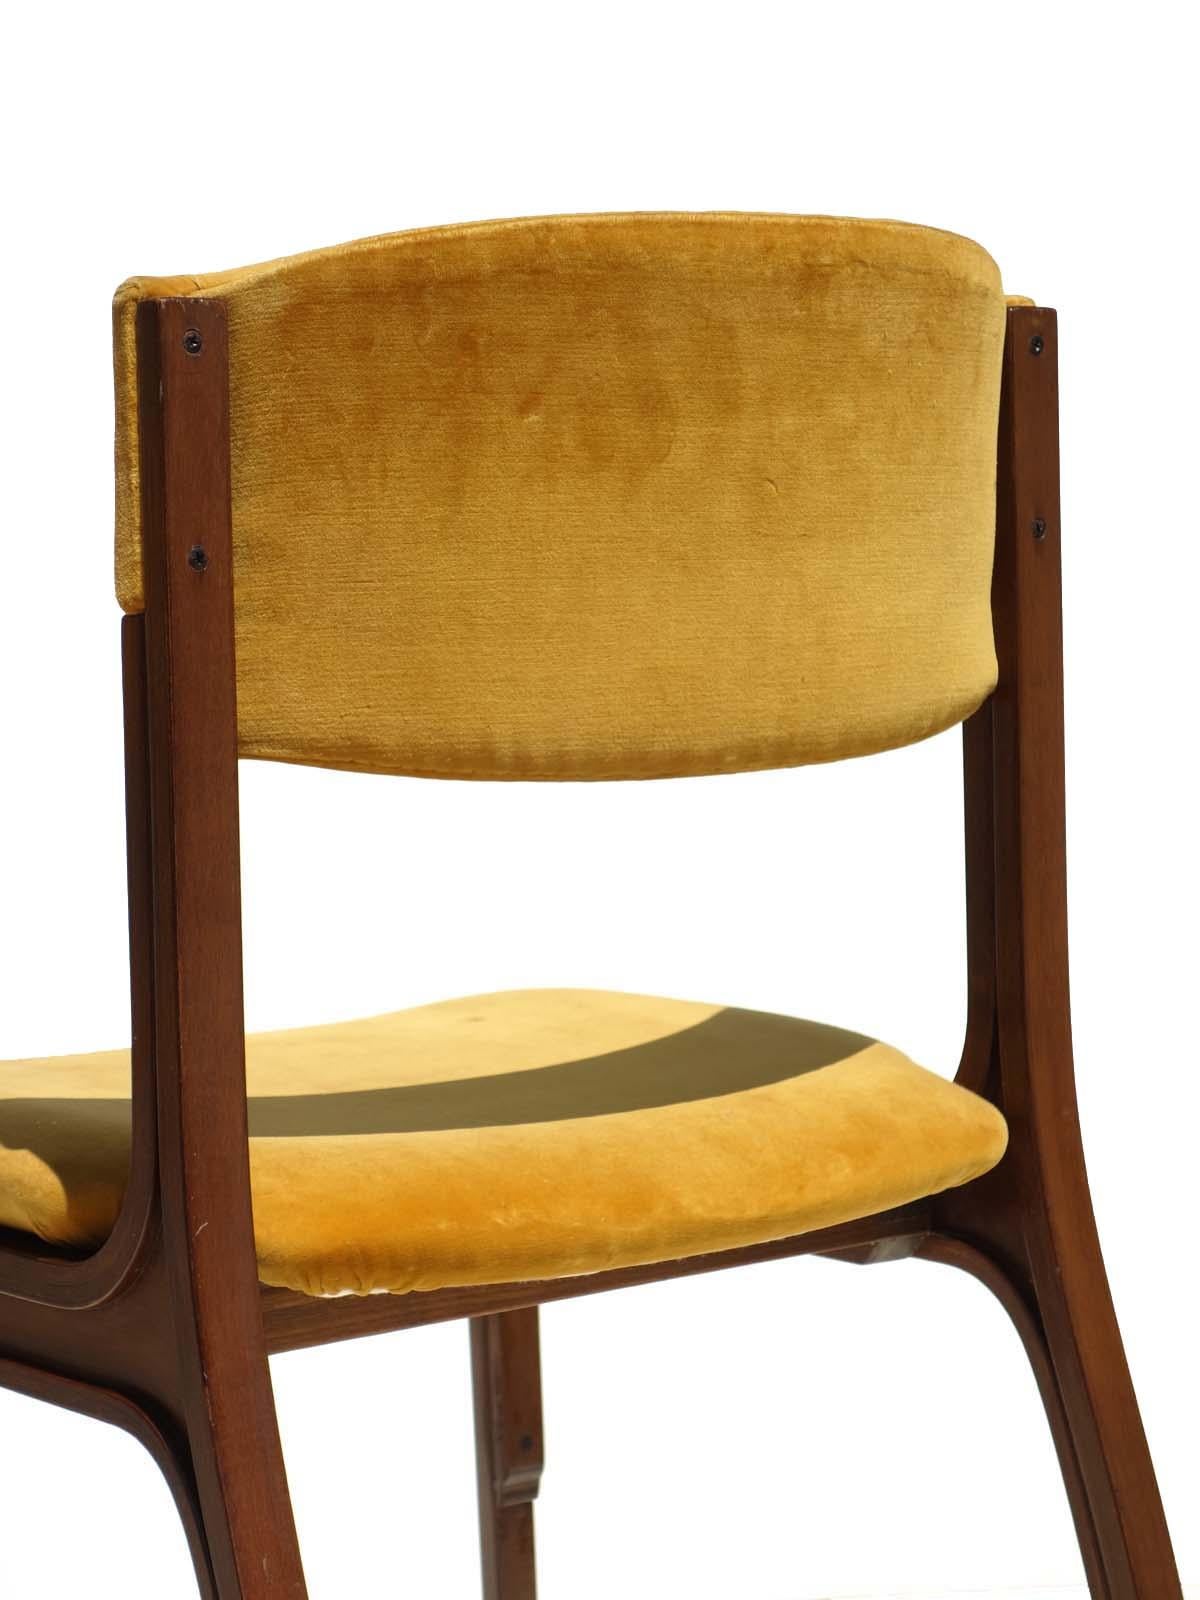 Mid-20th Century 1960 Gianfranco Frattini for Cantieri Carugati Italian Design Chairs, Set of 4